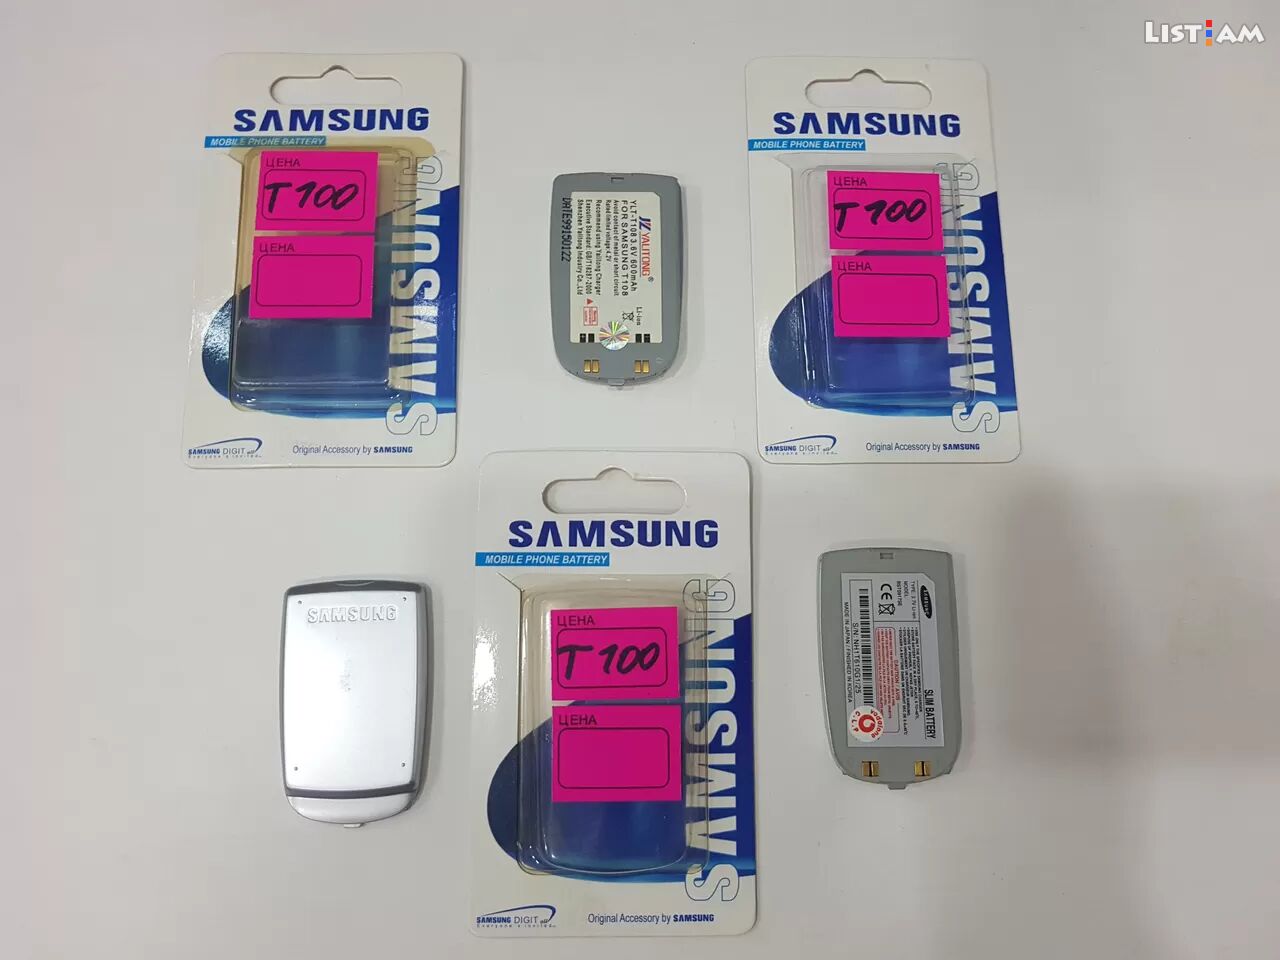 Samsung t100 battery